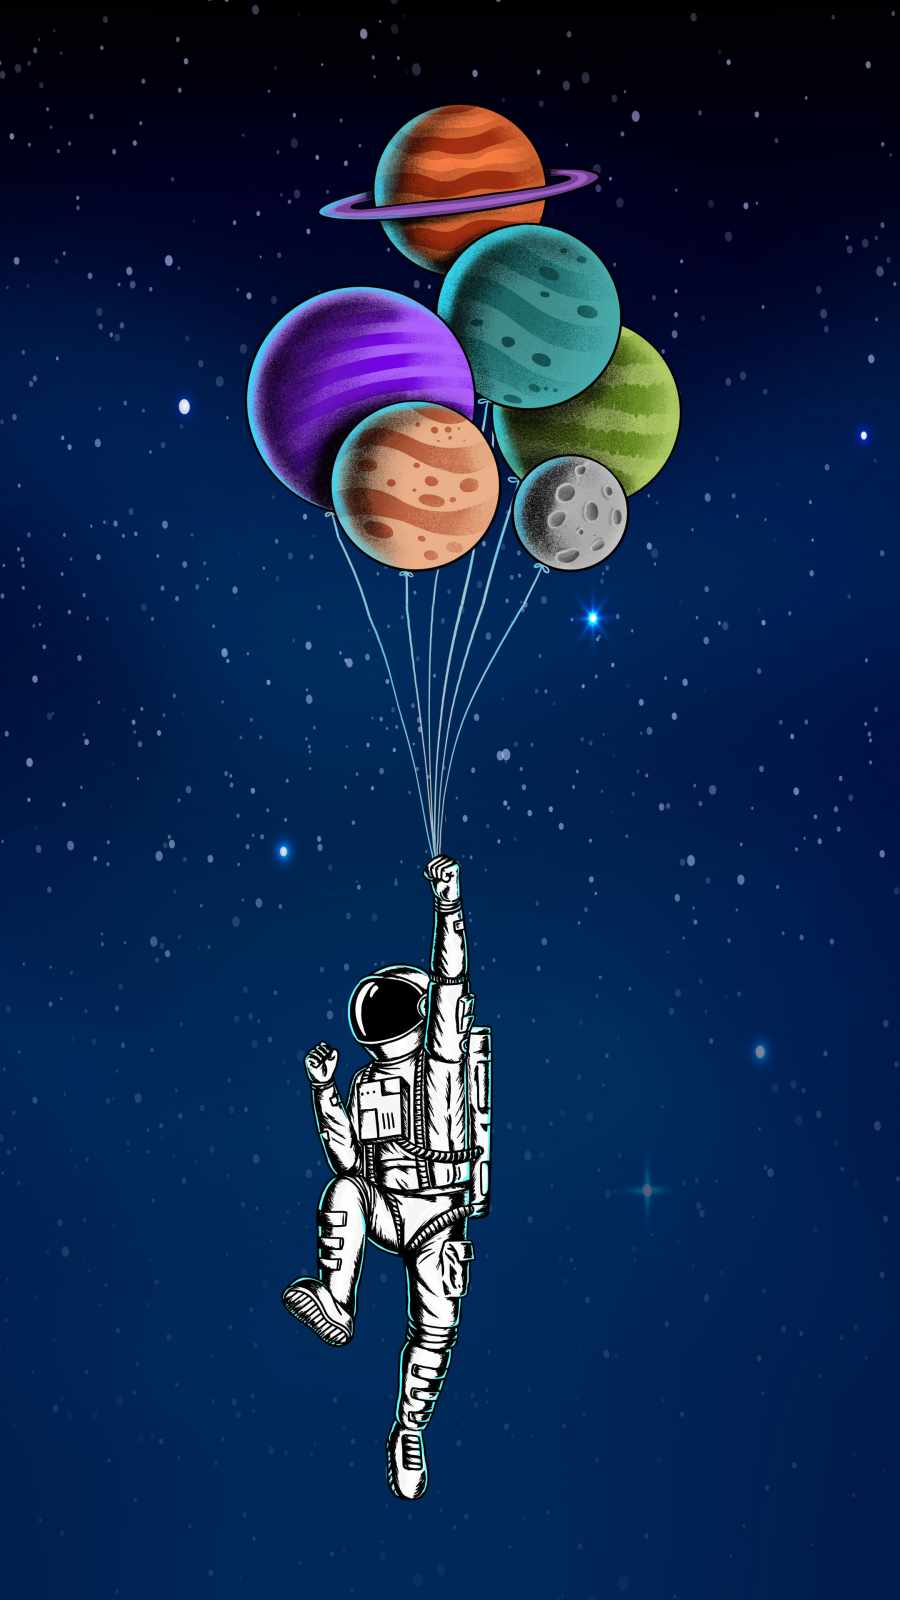 Astronaut Balloons iPhone Wallpaper